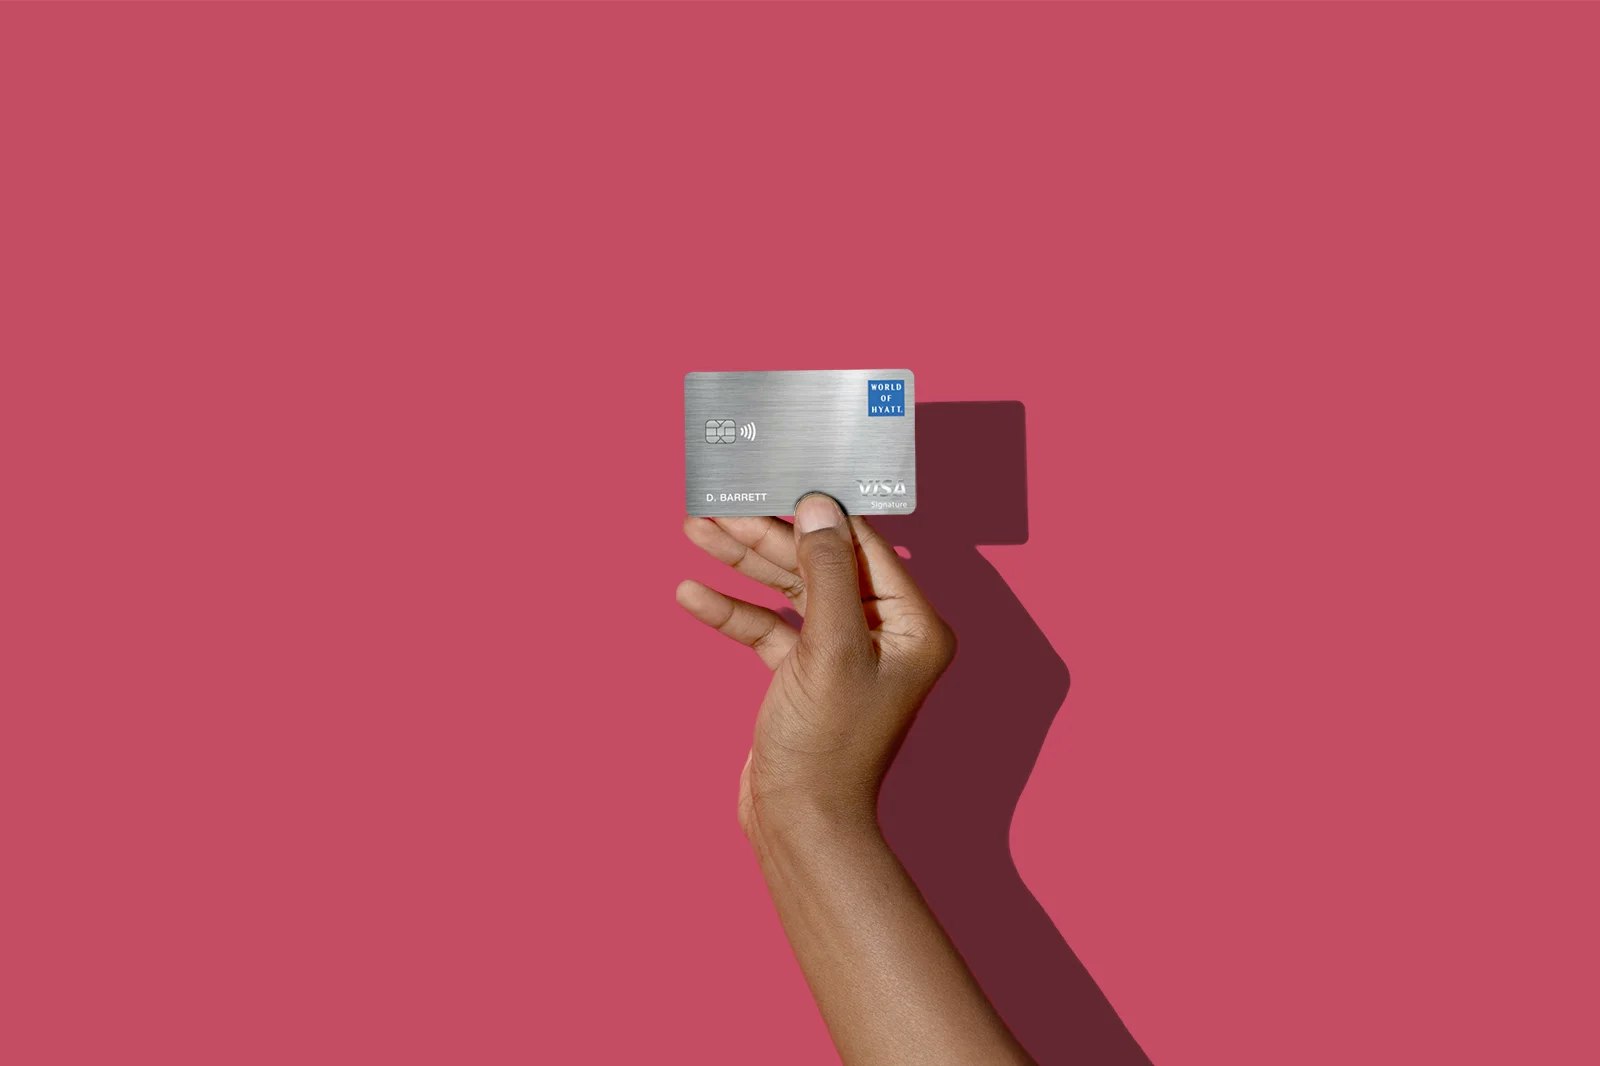 A World of Hyatt credit card